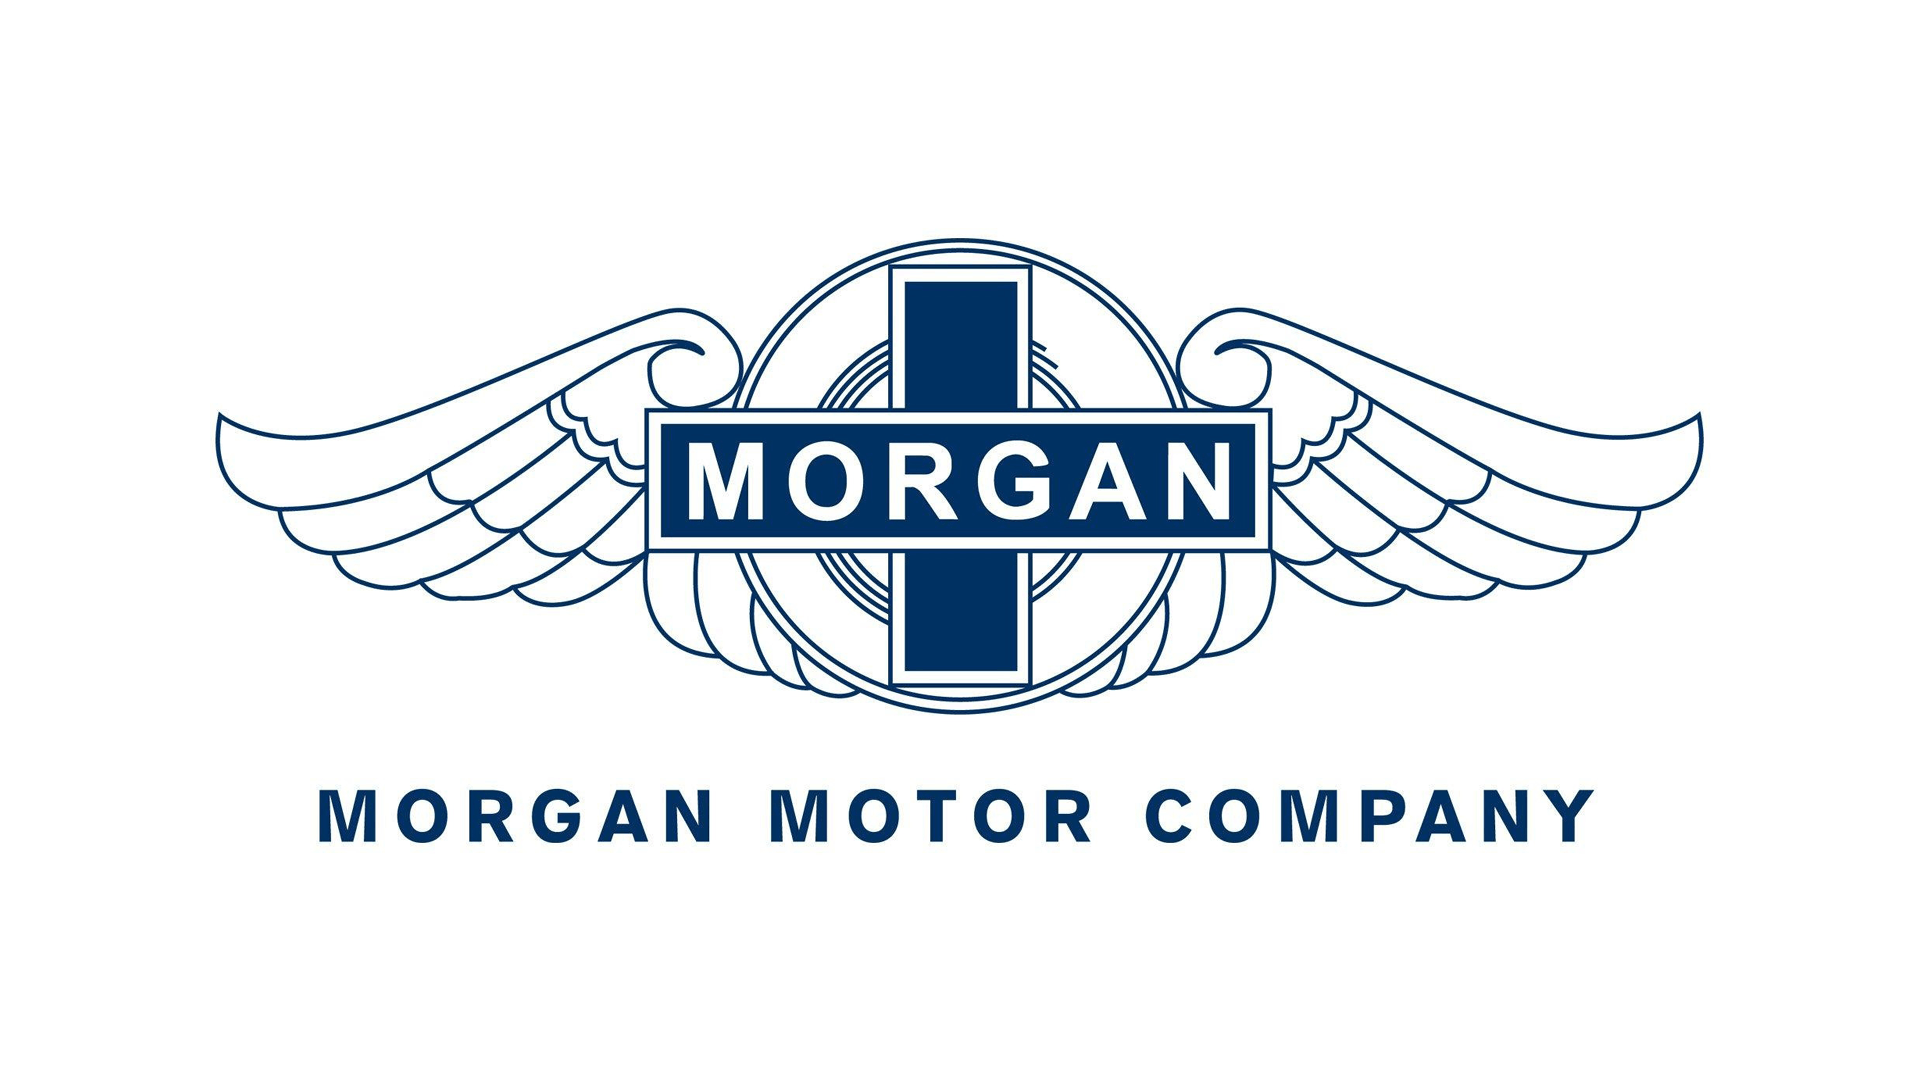 Auto Company Logo - Morgan logo, Meaning, Information | Carlogos.org